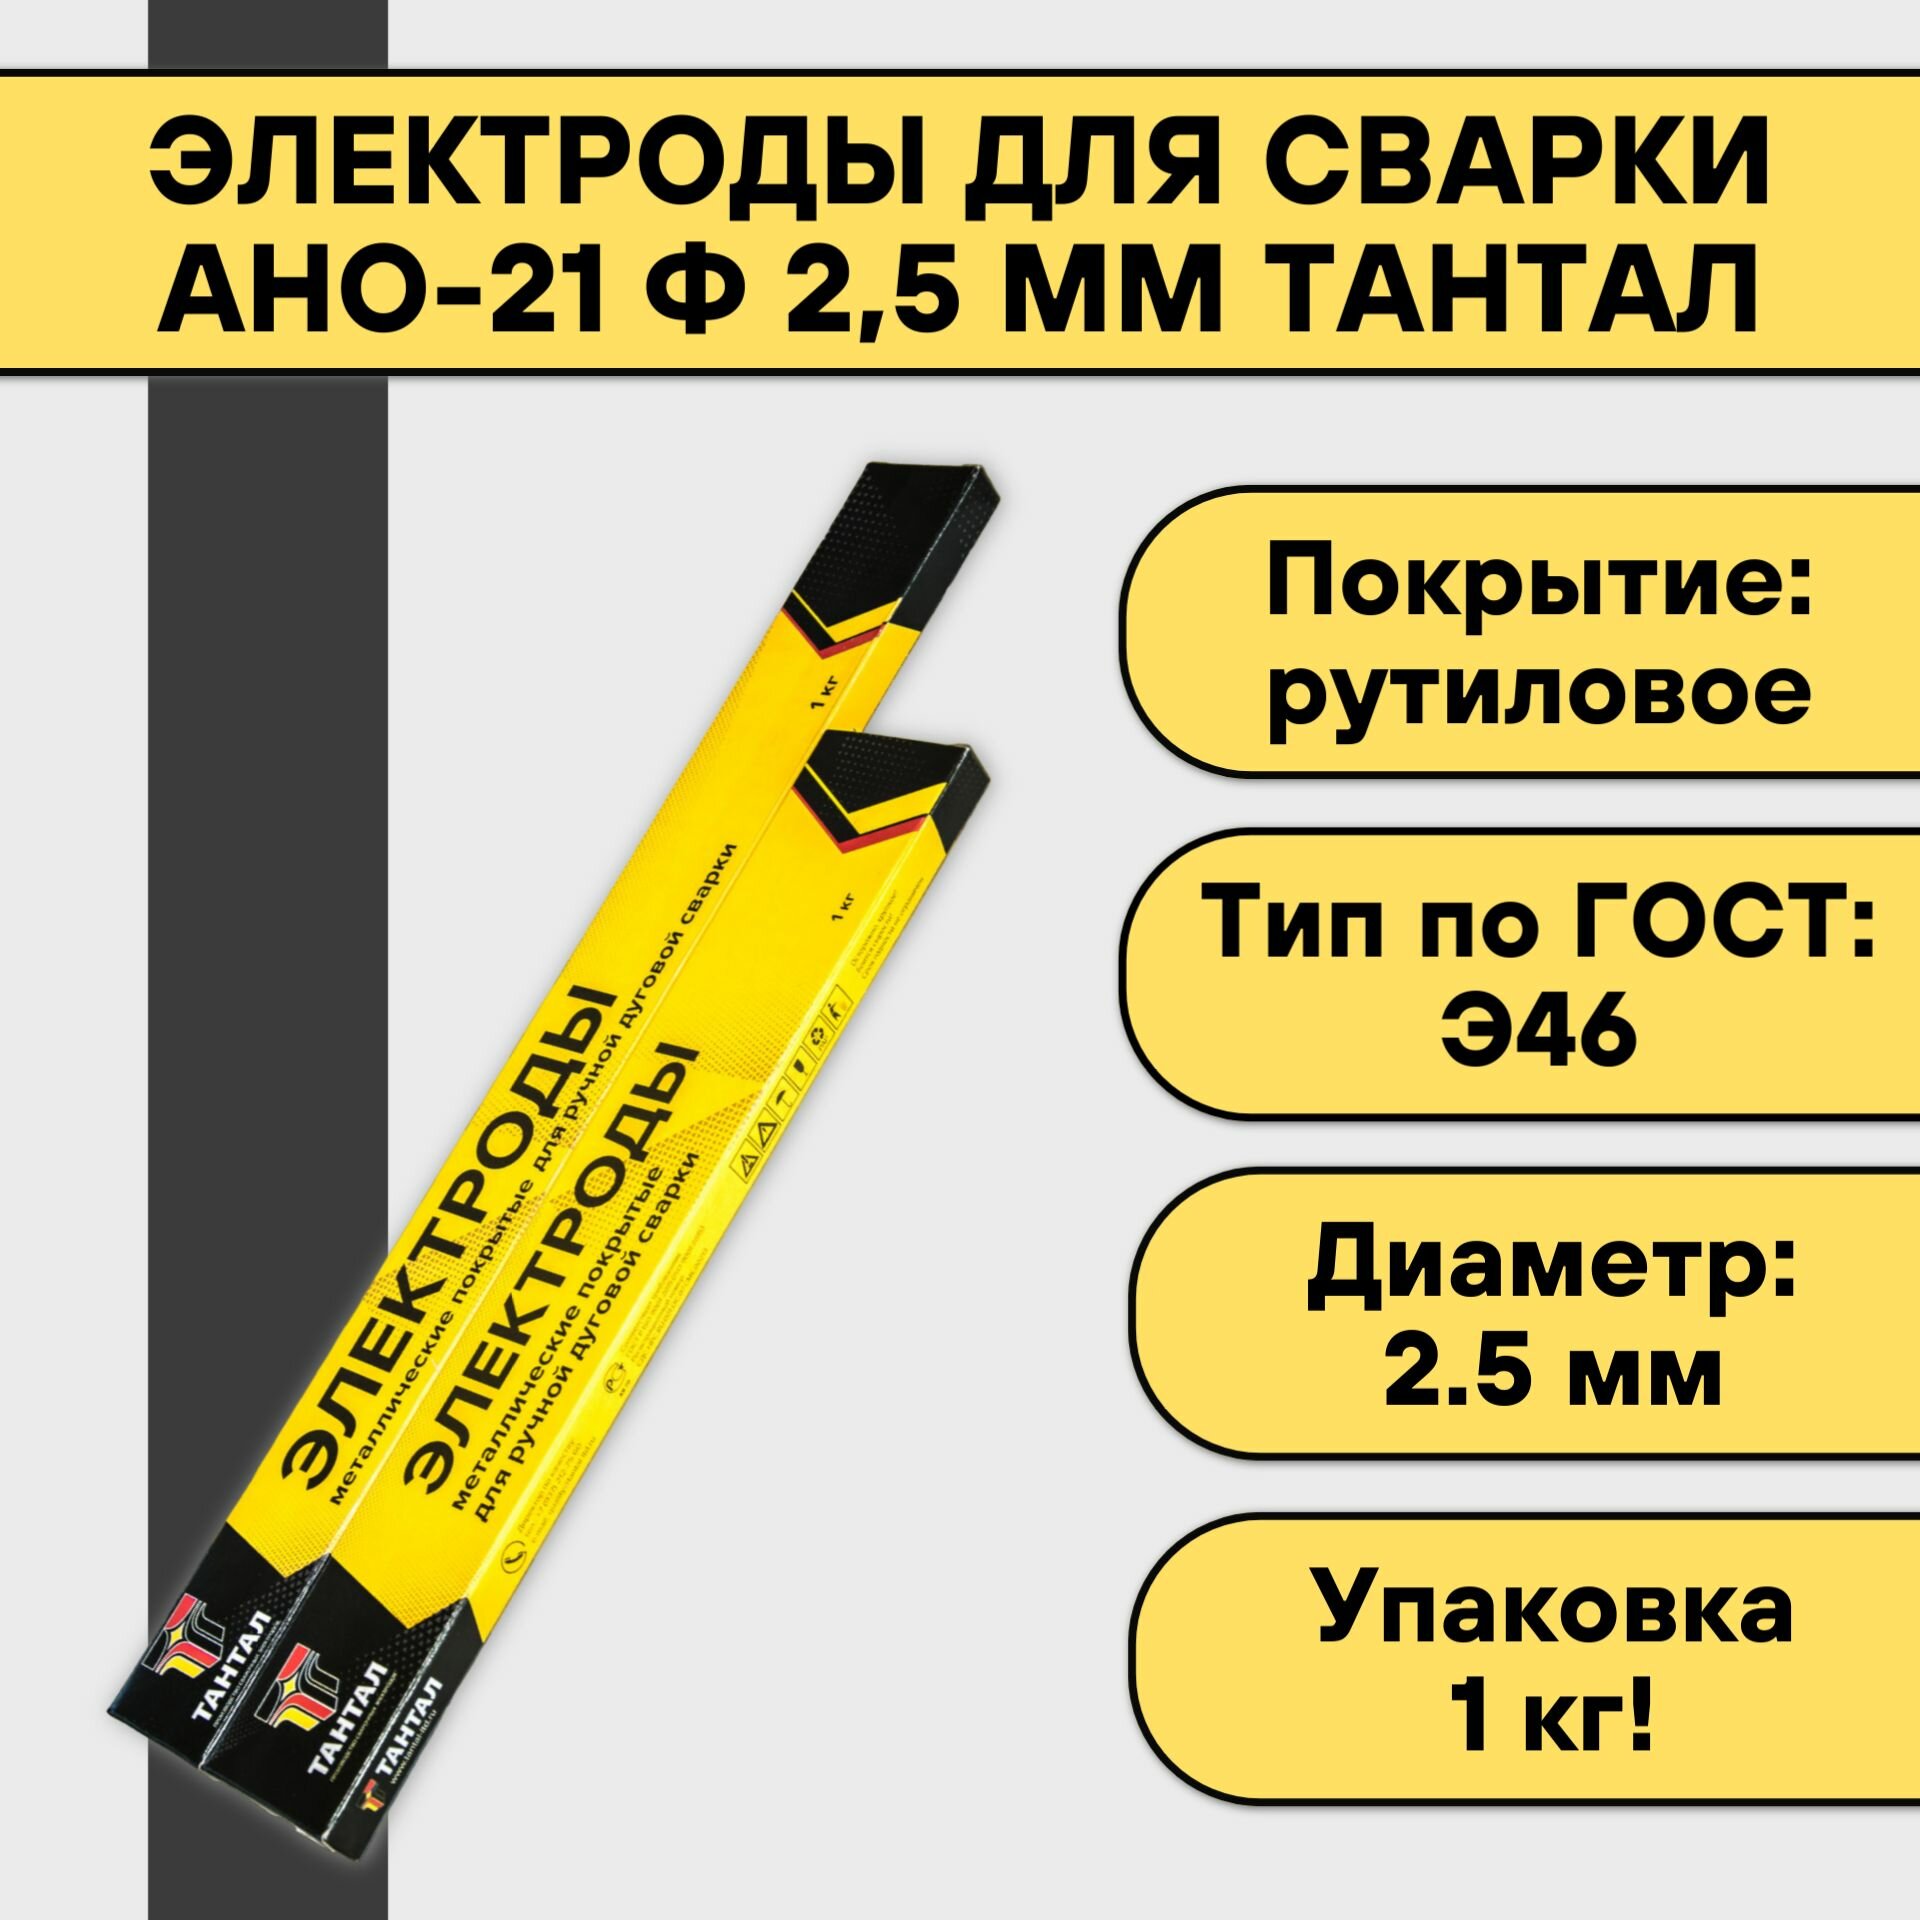 Электроды для сварки АНО-21 ф 2,5 мм (1 кг) Тантал